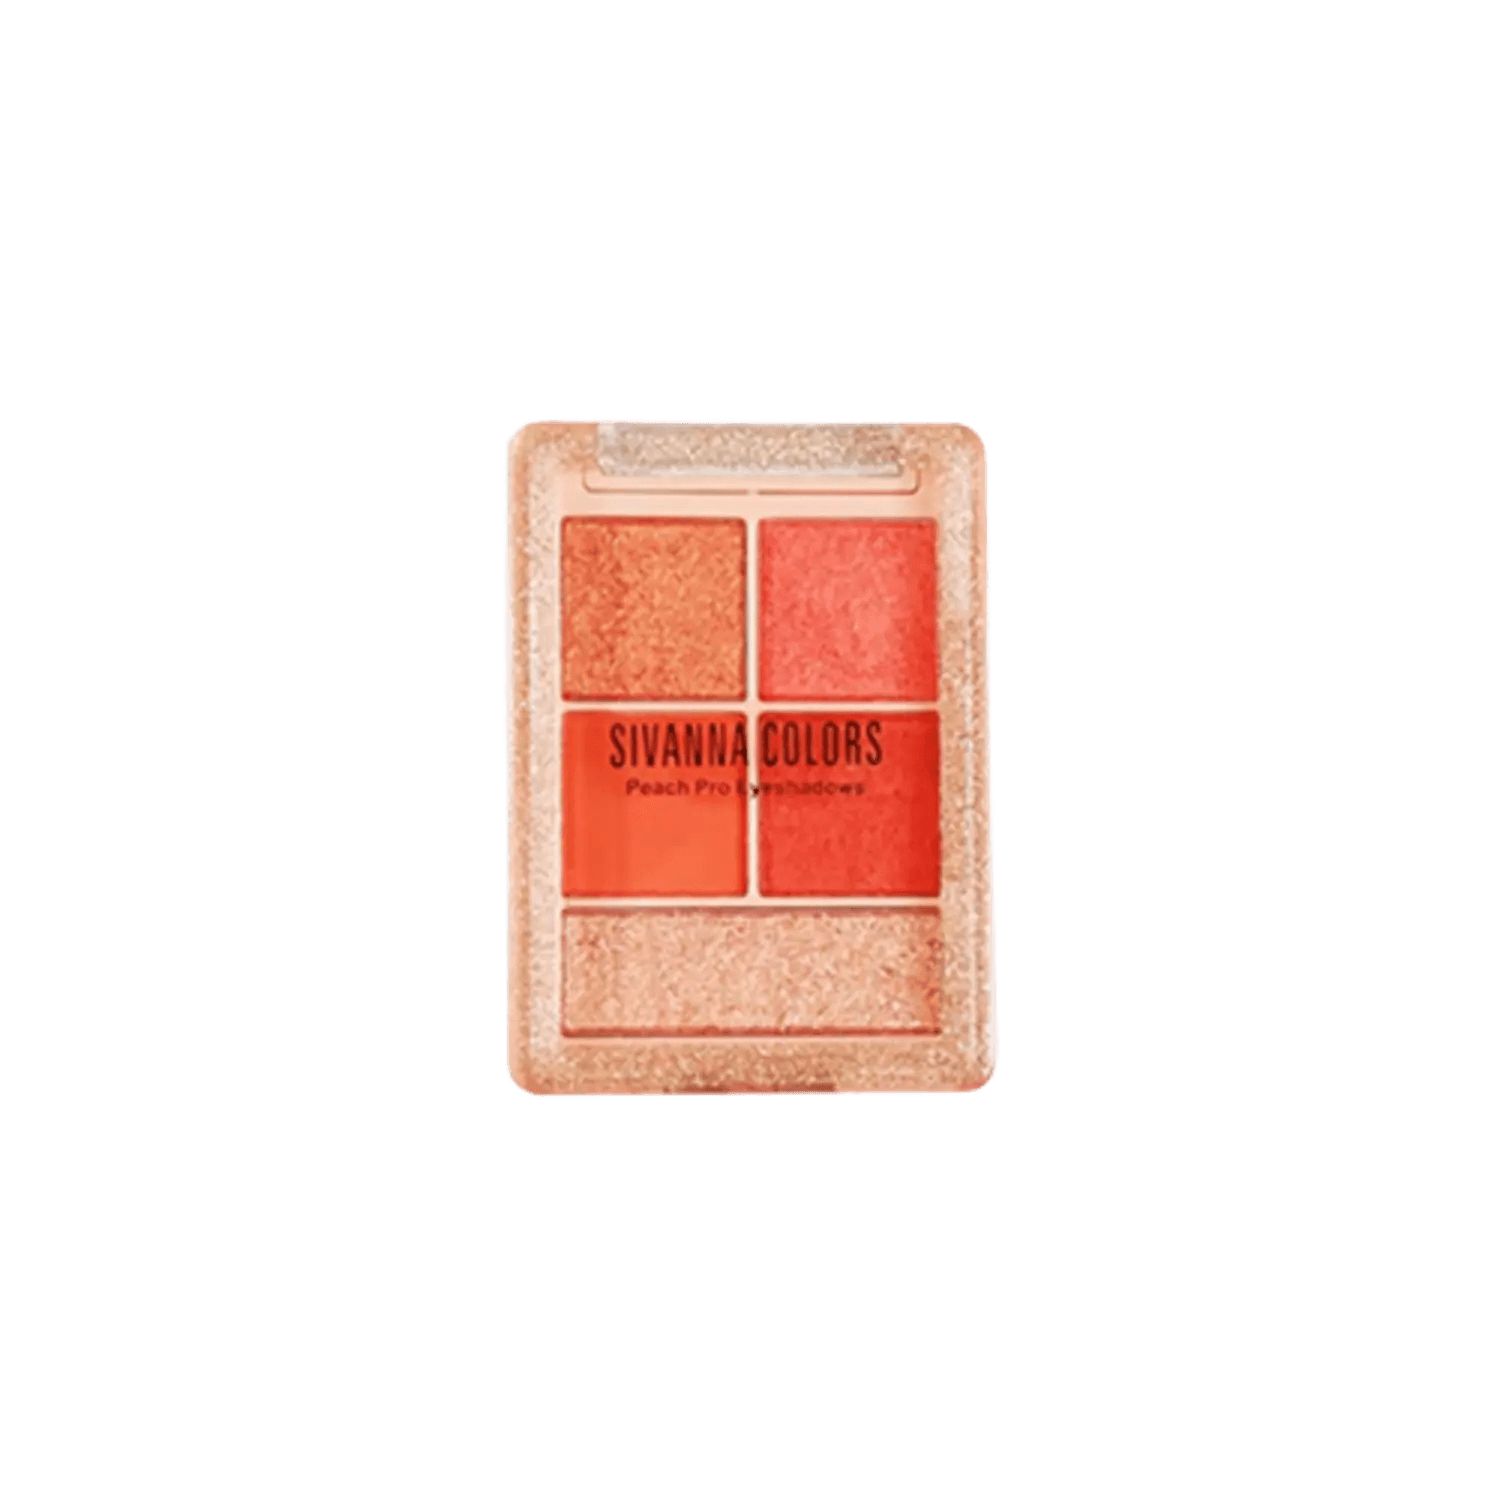 Sivanna | Sivanna Colors In The Peach Pro Mini Eyeshadow Palette - 02 Shade (6g)